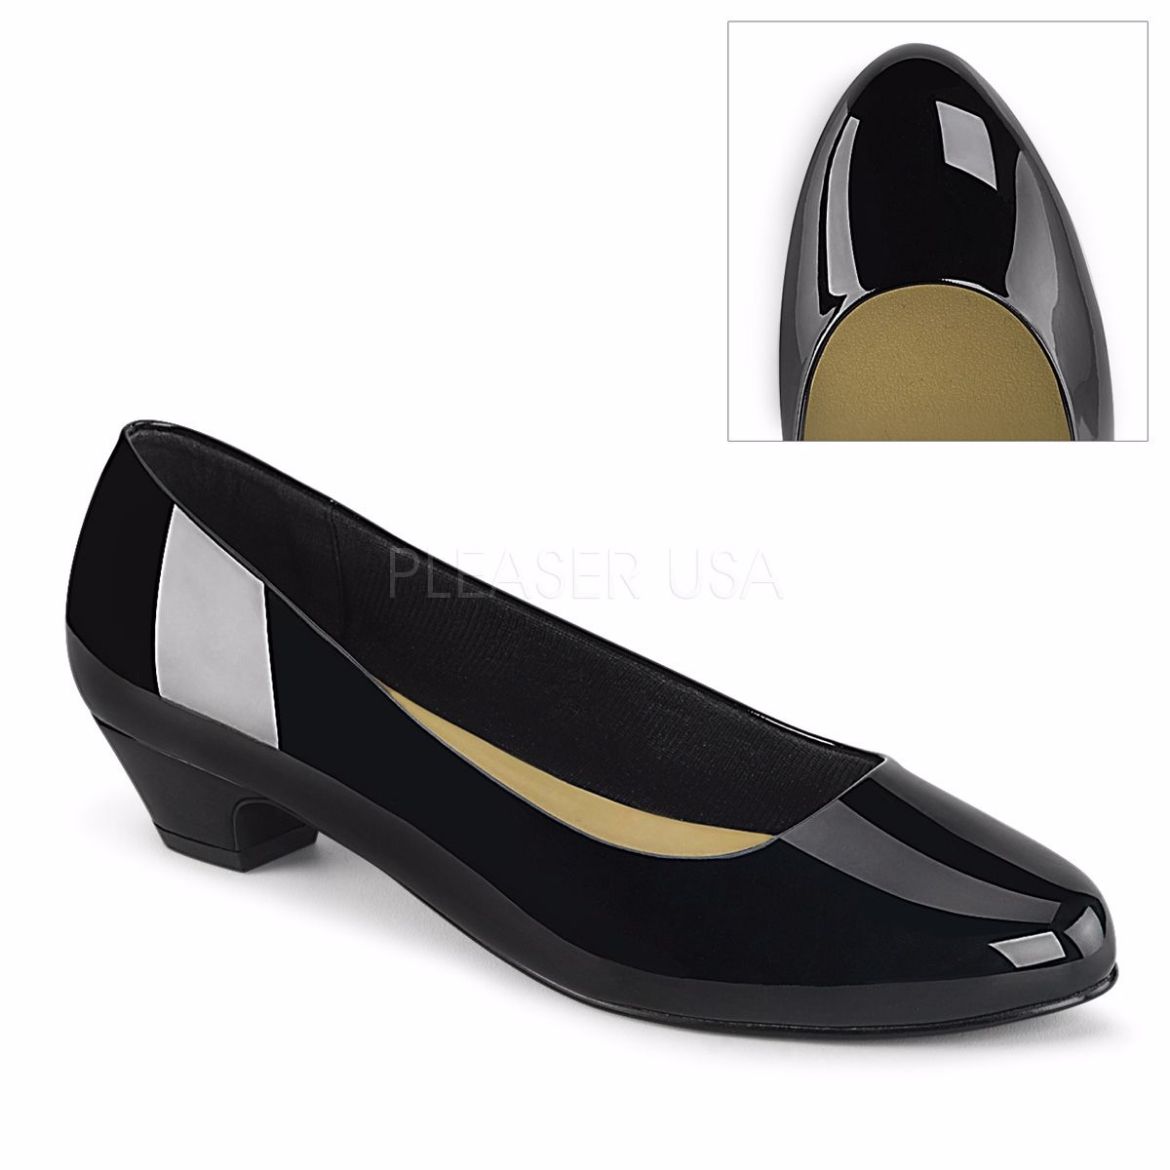 Product image of Pleaser Pink Label GWEN-01 Black Patent 1 1/4 inch (3.2 cm) Block Heel Classic Pump Court Pump Shoes